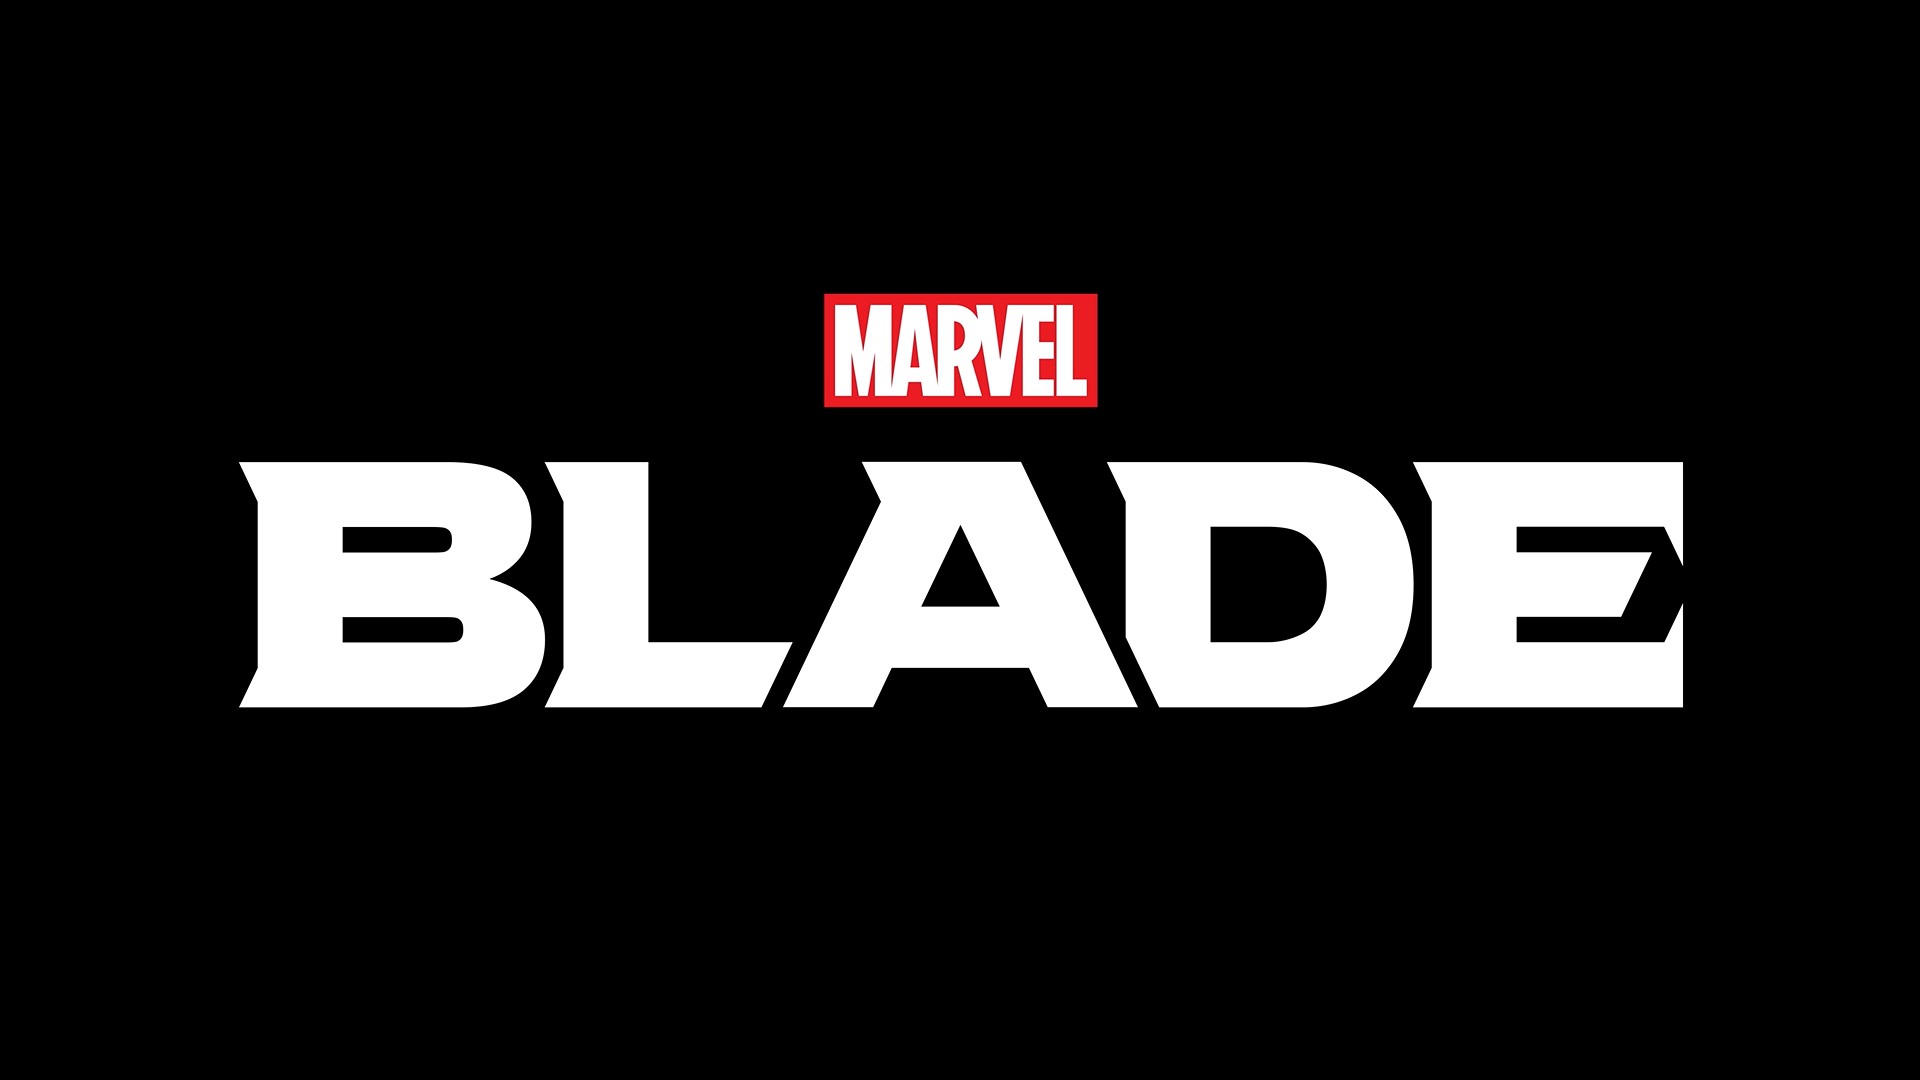 Marvel’s Blade ظاهرا از دو سال پیش در دست ساخت بوده